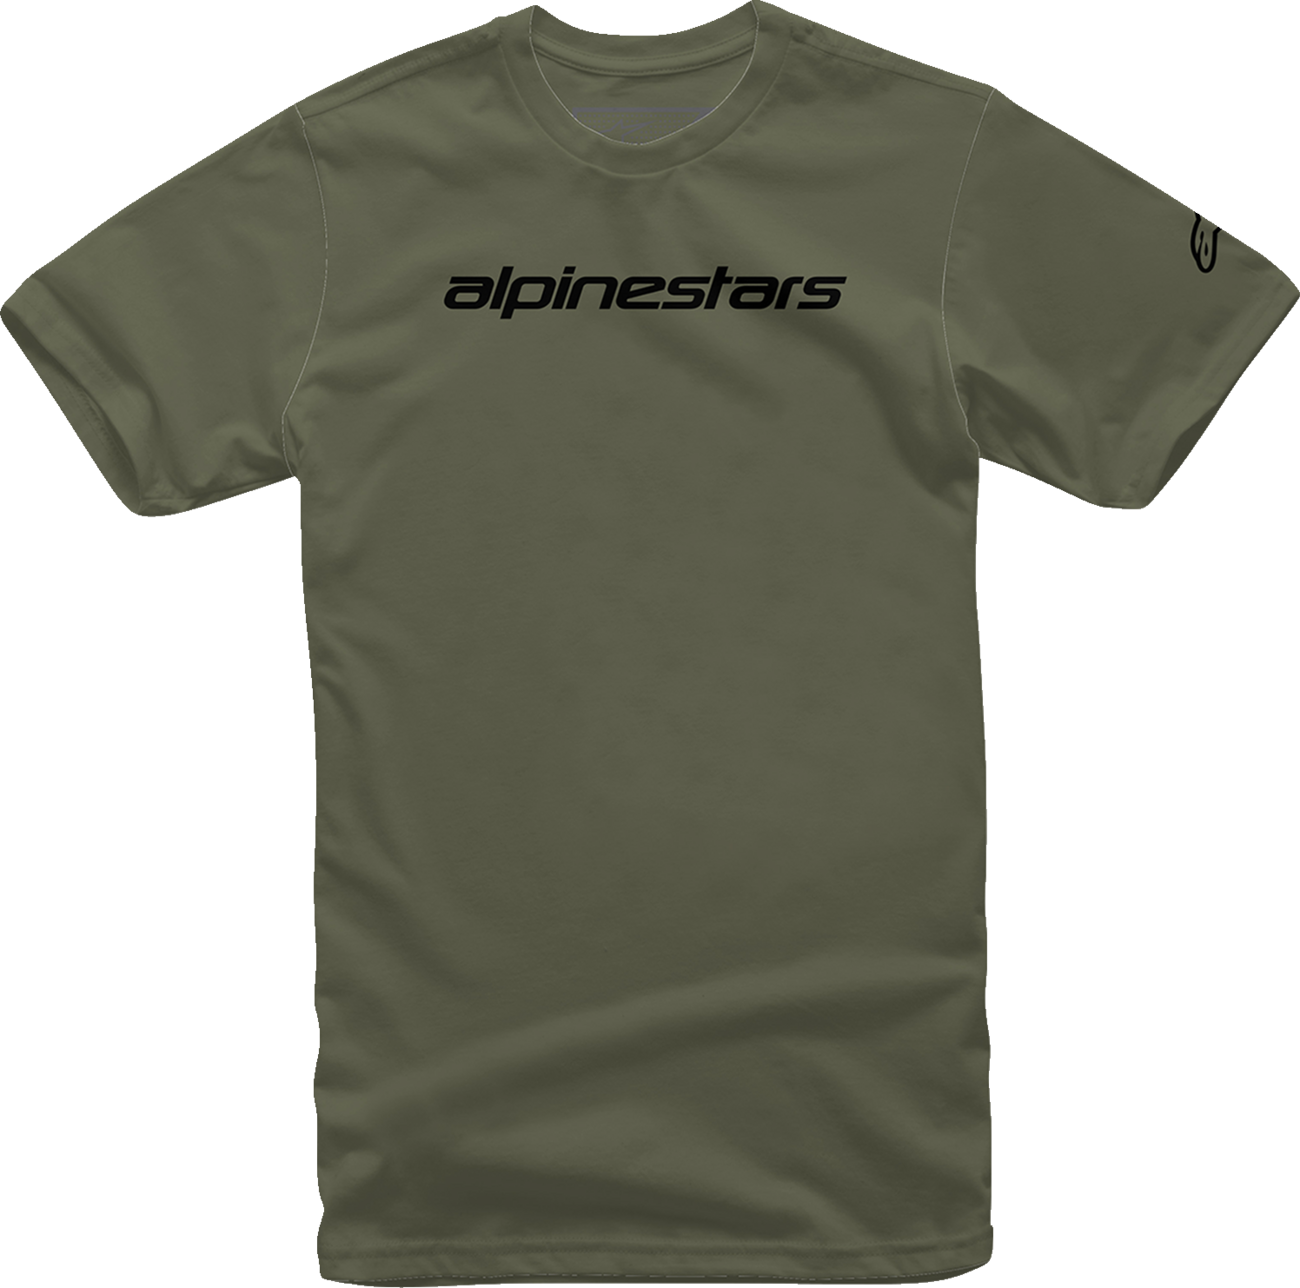 ALPINESTARS Linear Wordmark T-Shirt - Military/Black - Medium 1212720206910M